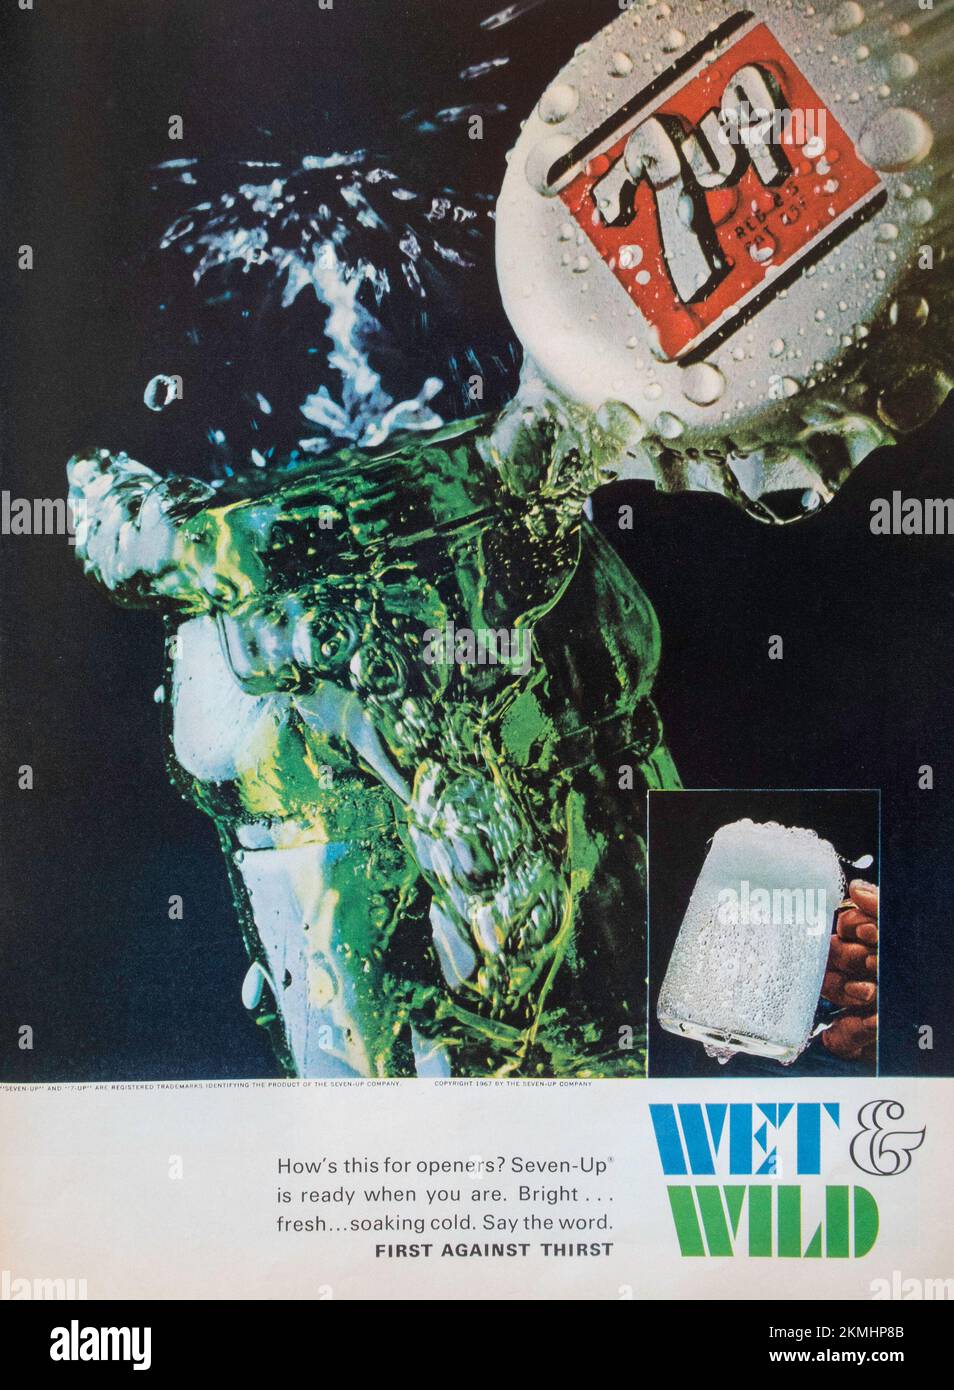 Vintage 4 August 1967 'Life' Magazine Advert, USA Stock Photo